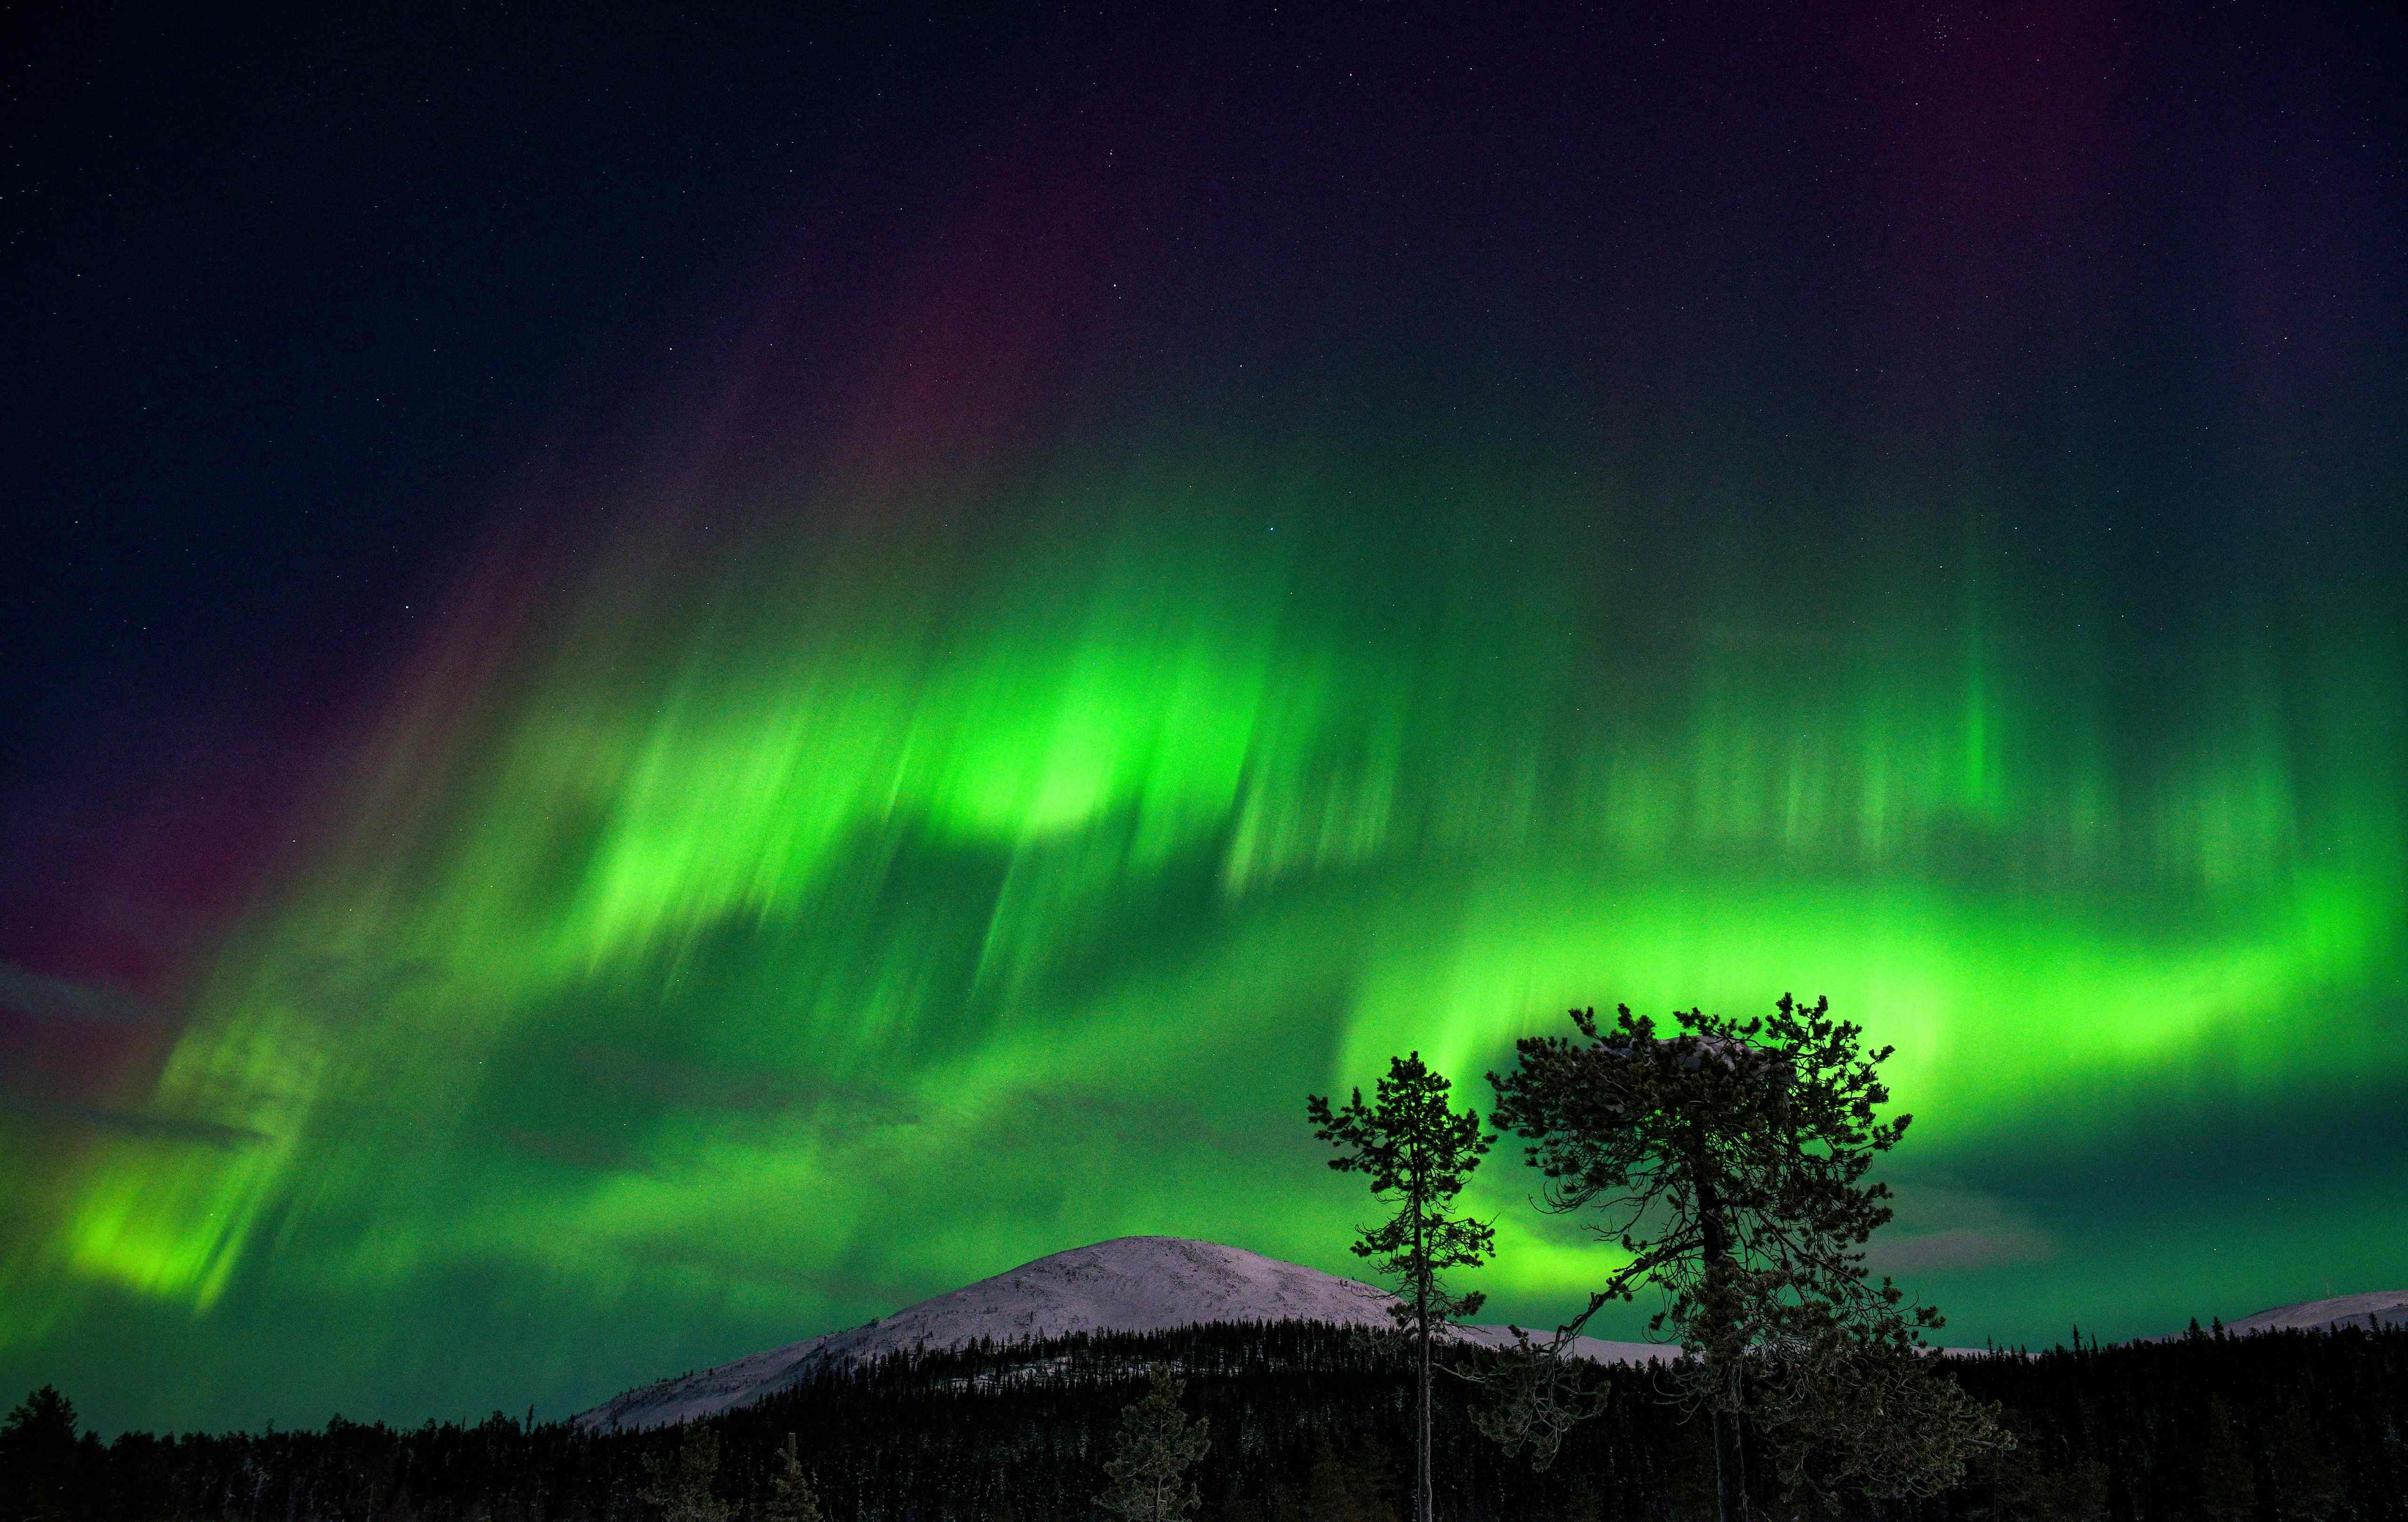 Aurora borealis seen in the Lapland region of Finland